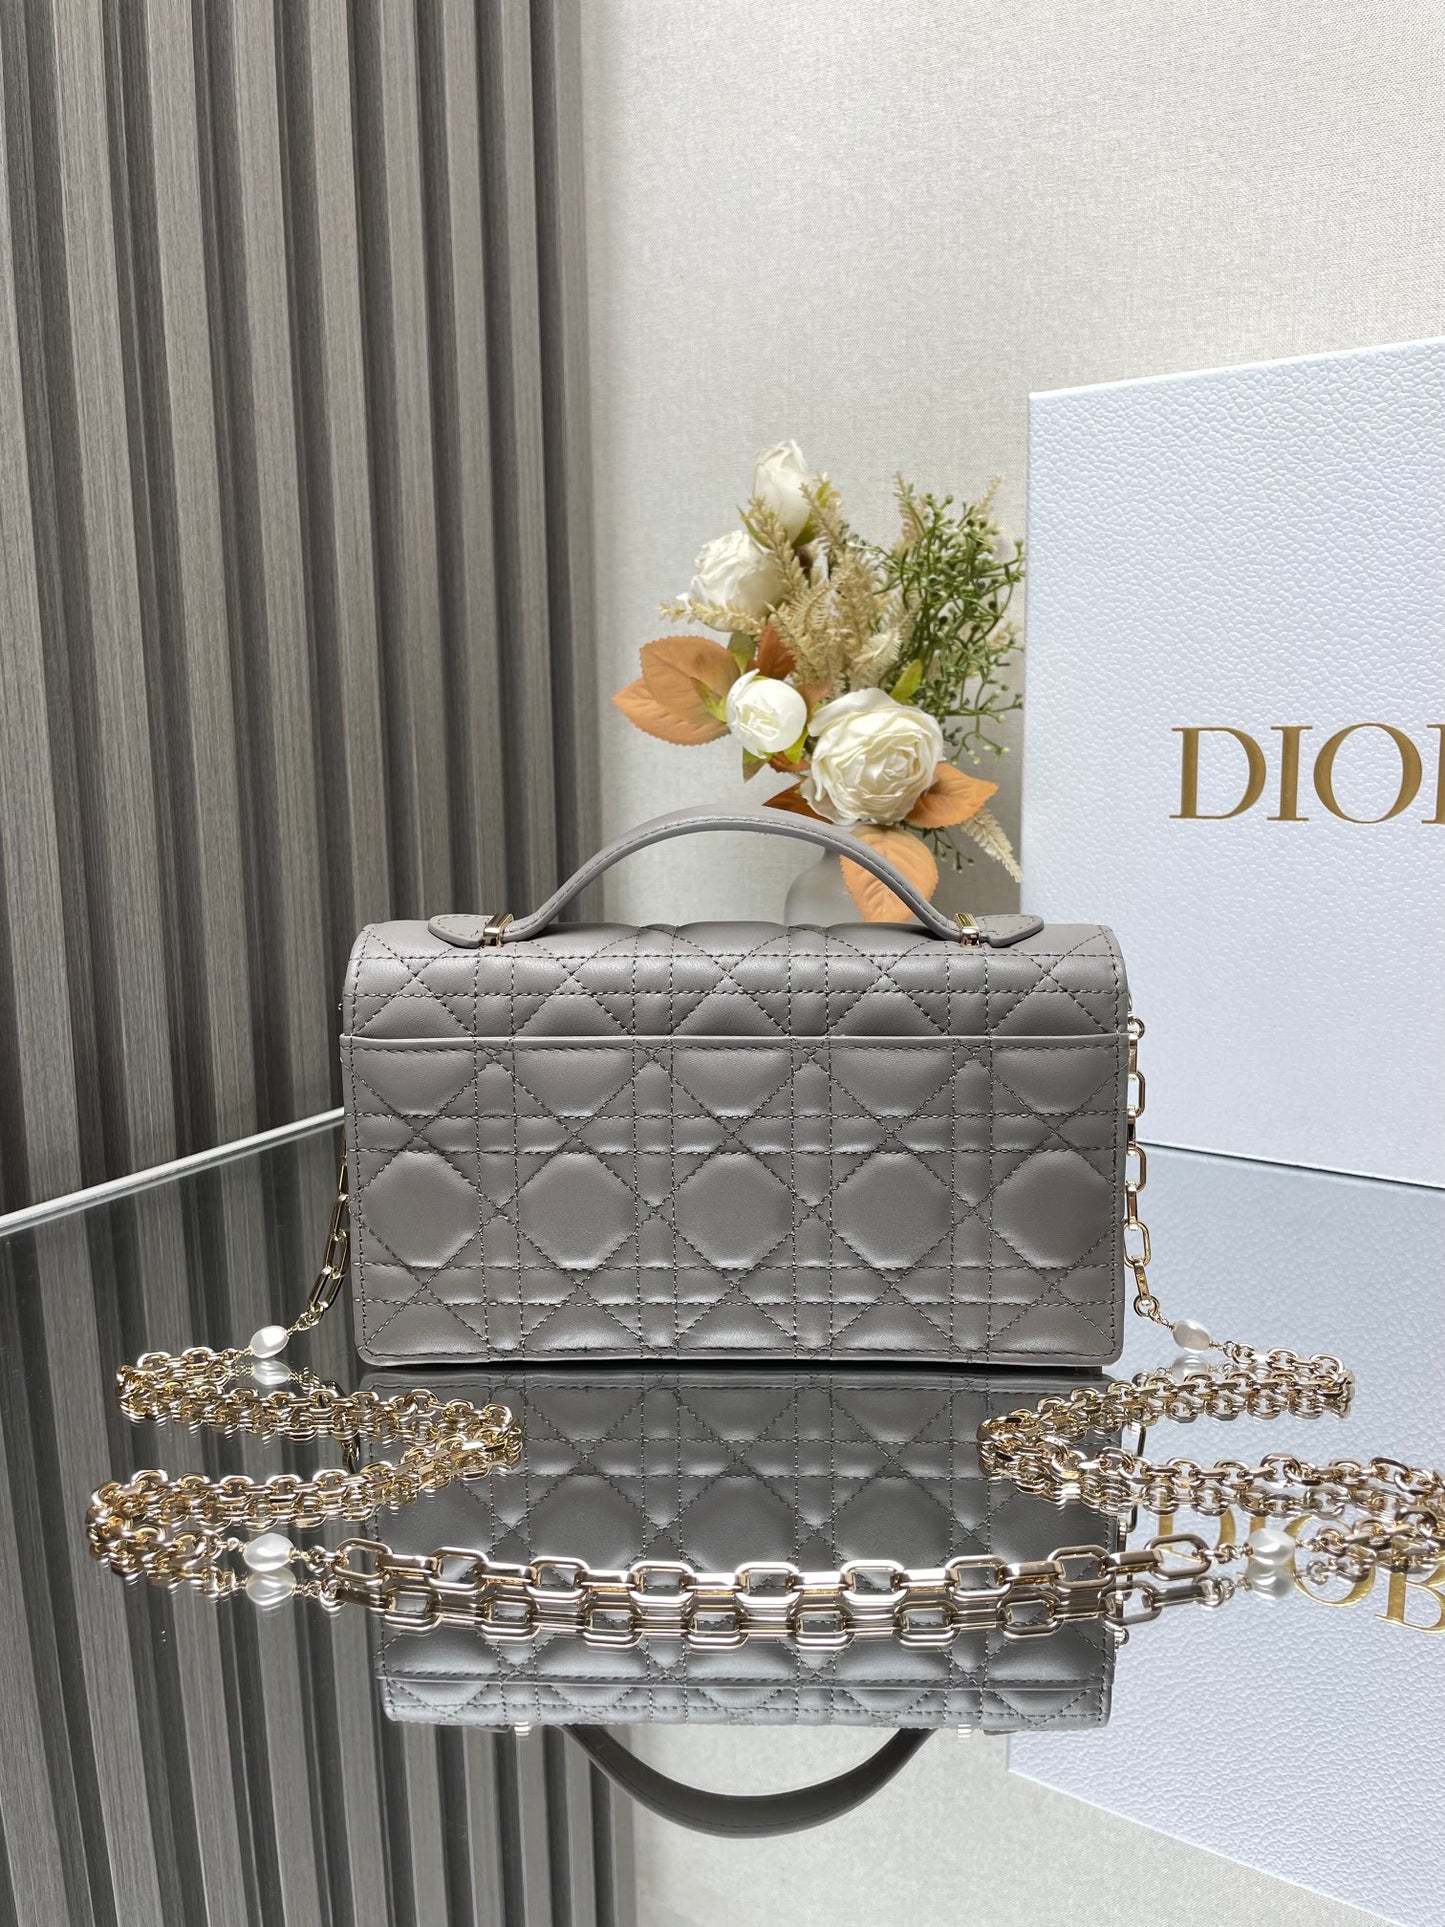 Lady Dior Pearl Clutch Bag Gray Color